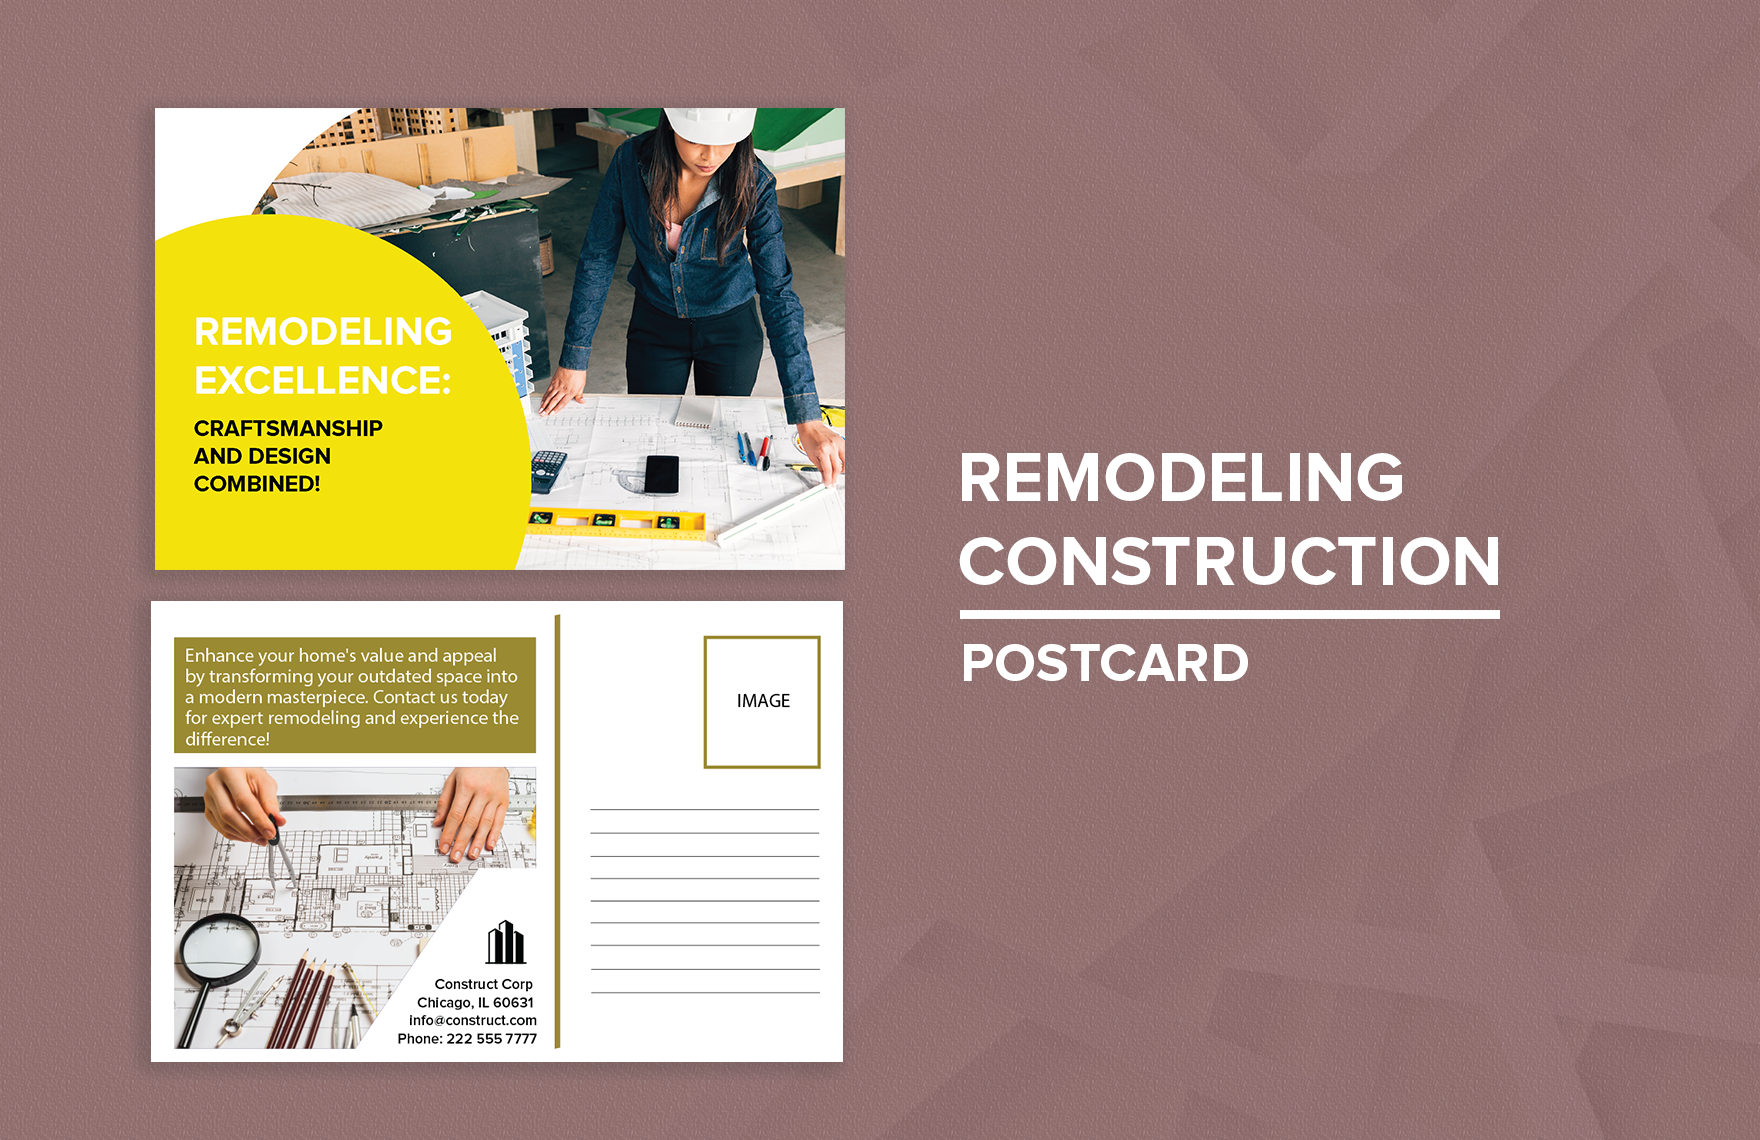 Remodeling Construction Postcard